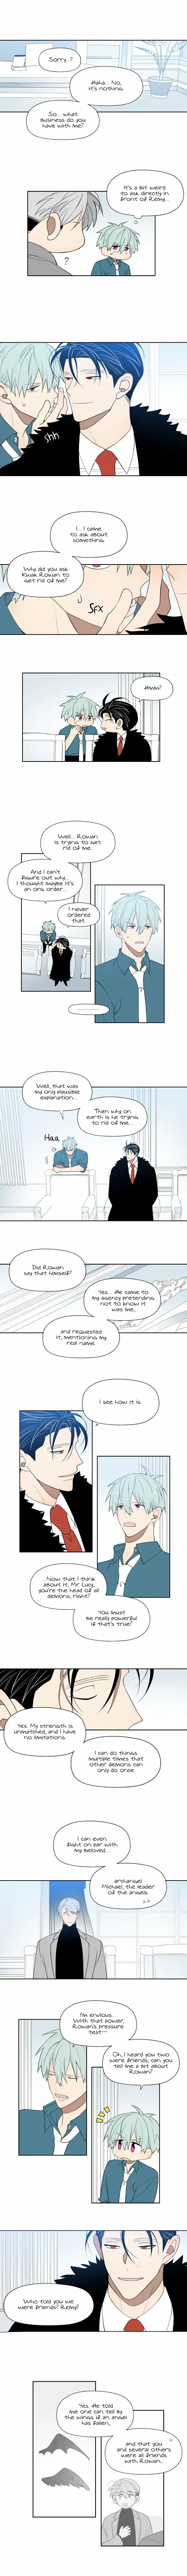 Kang Isae's Happy Ending - Page 2